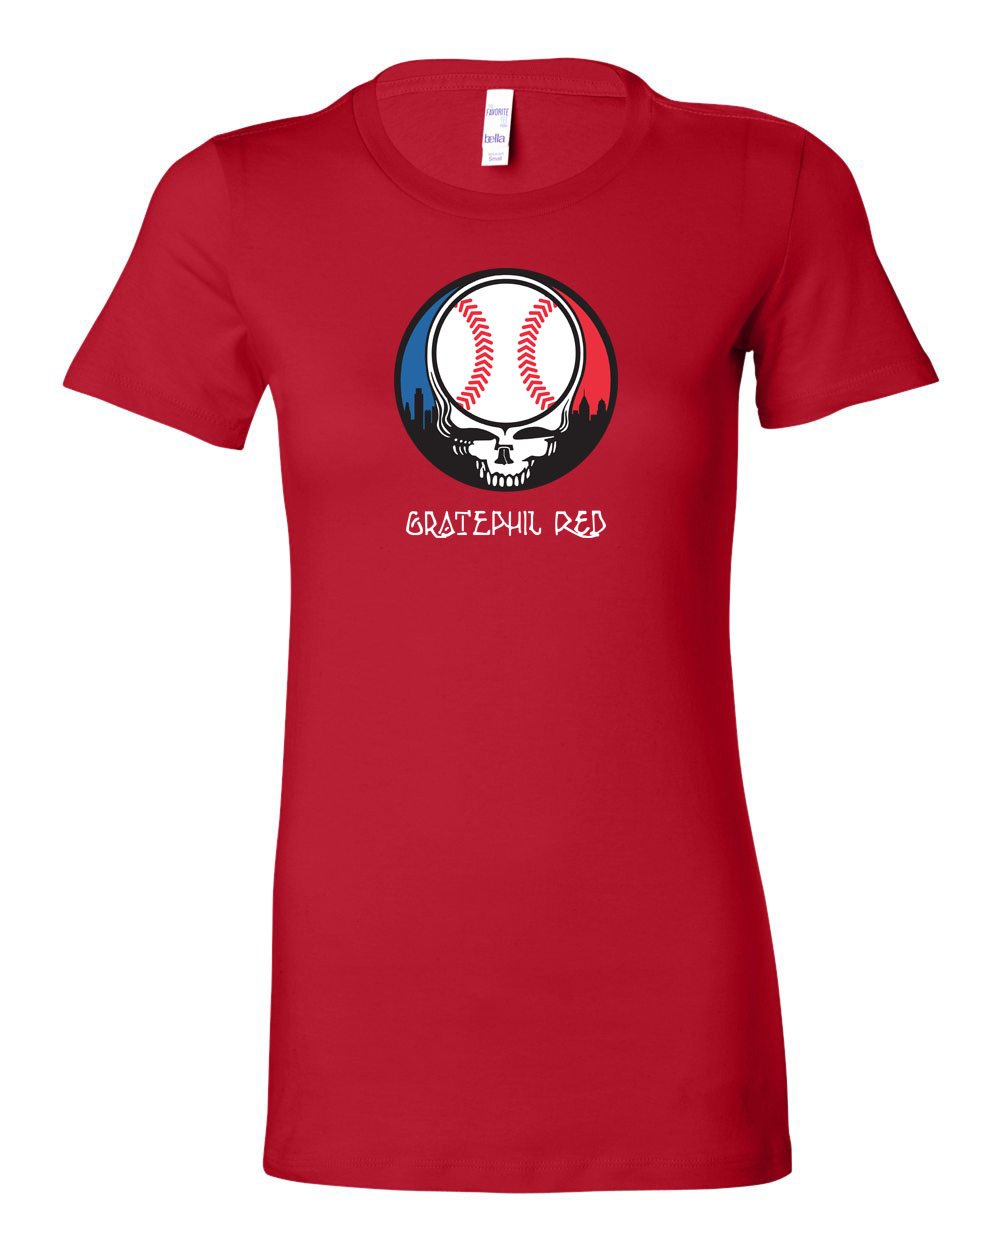 Gratephil Red LADIES Junior-Fit T-Shirt